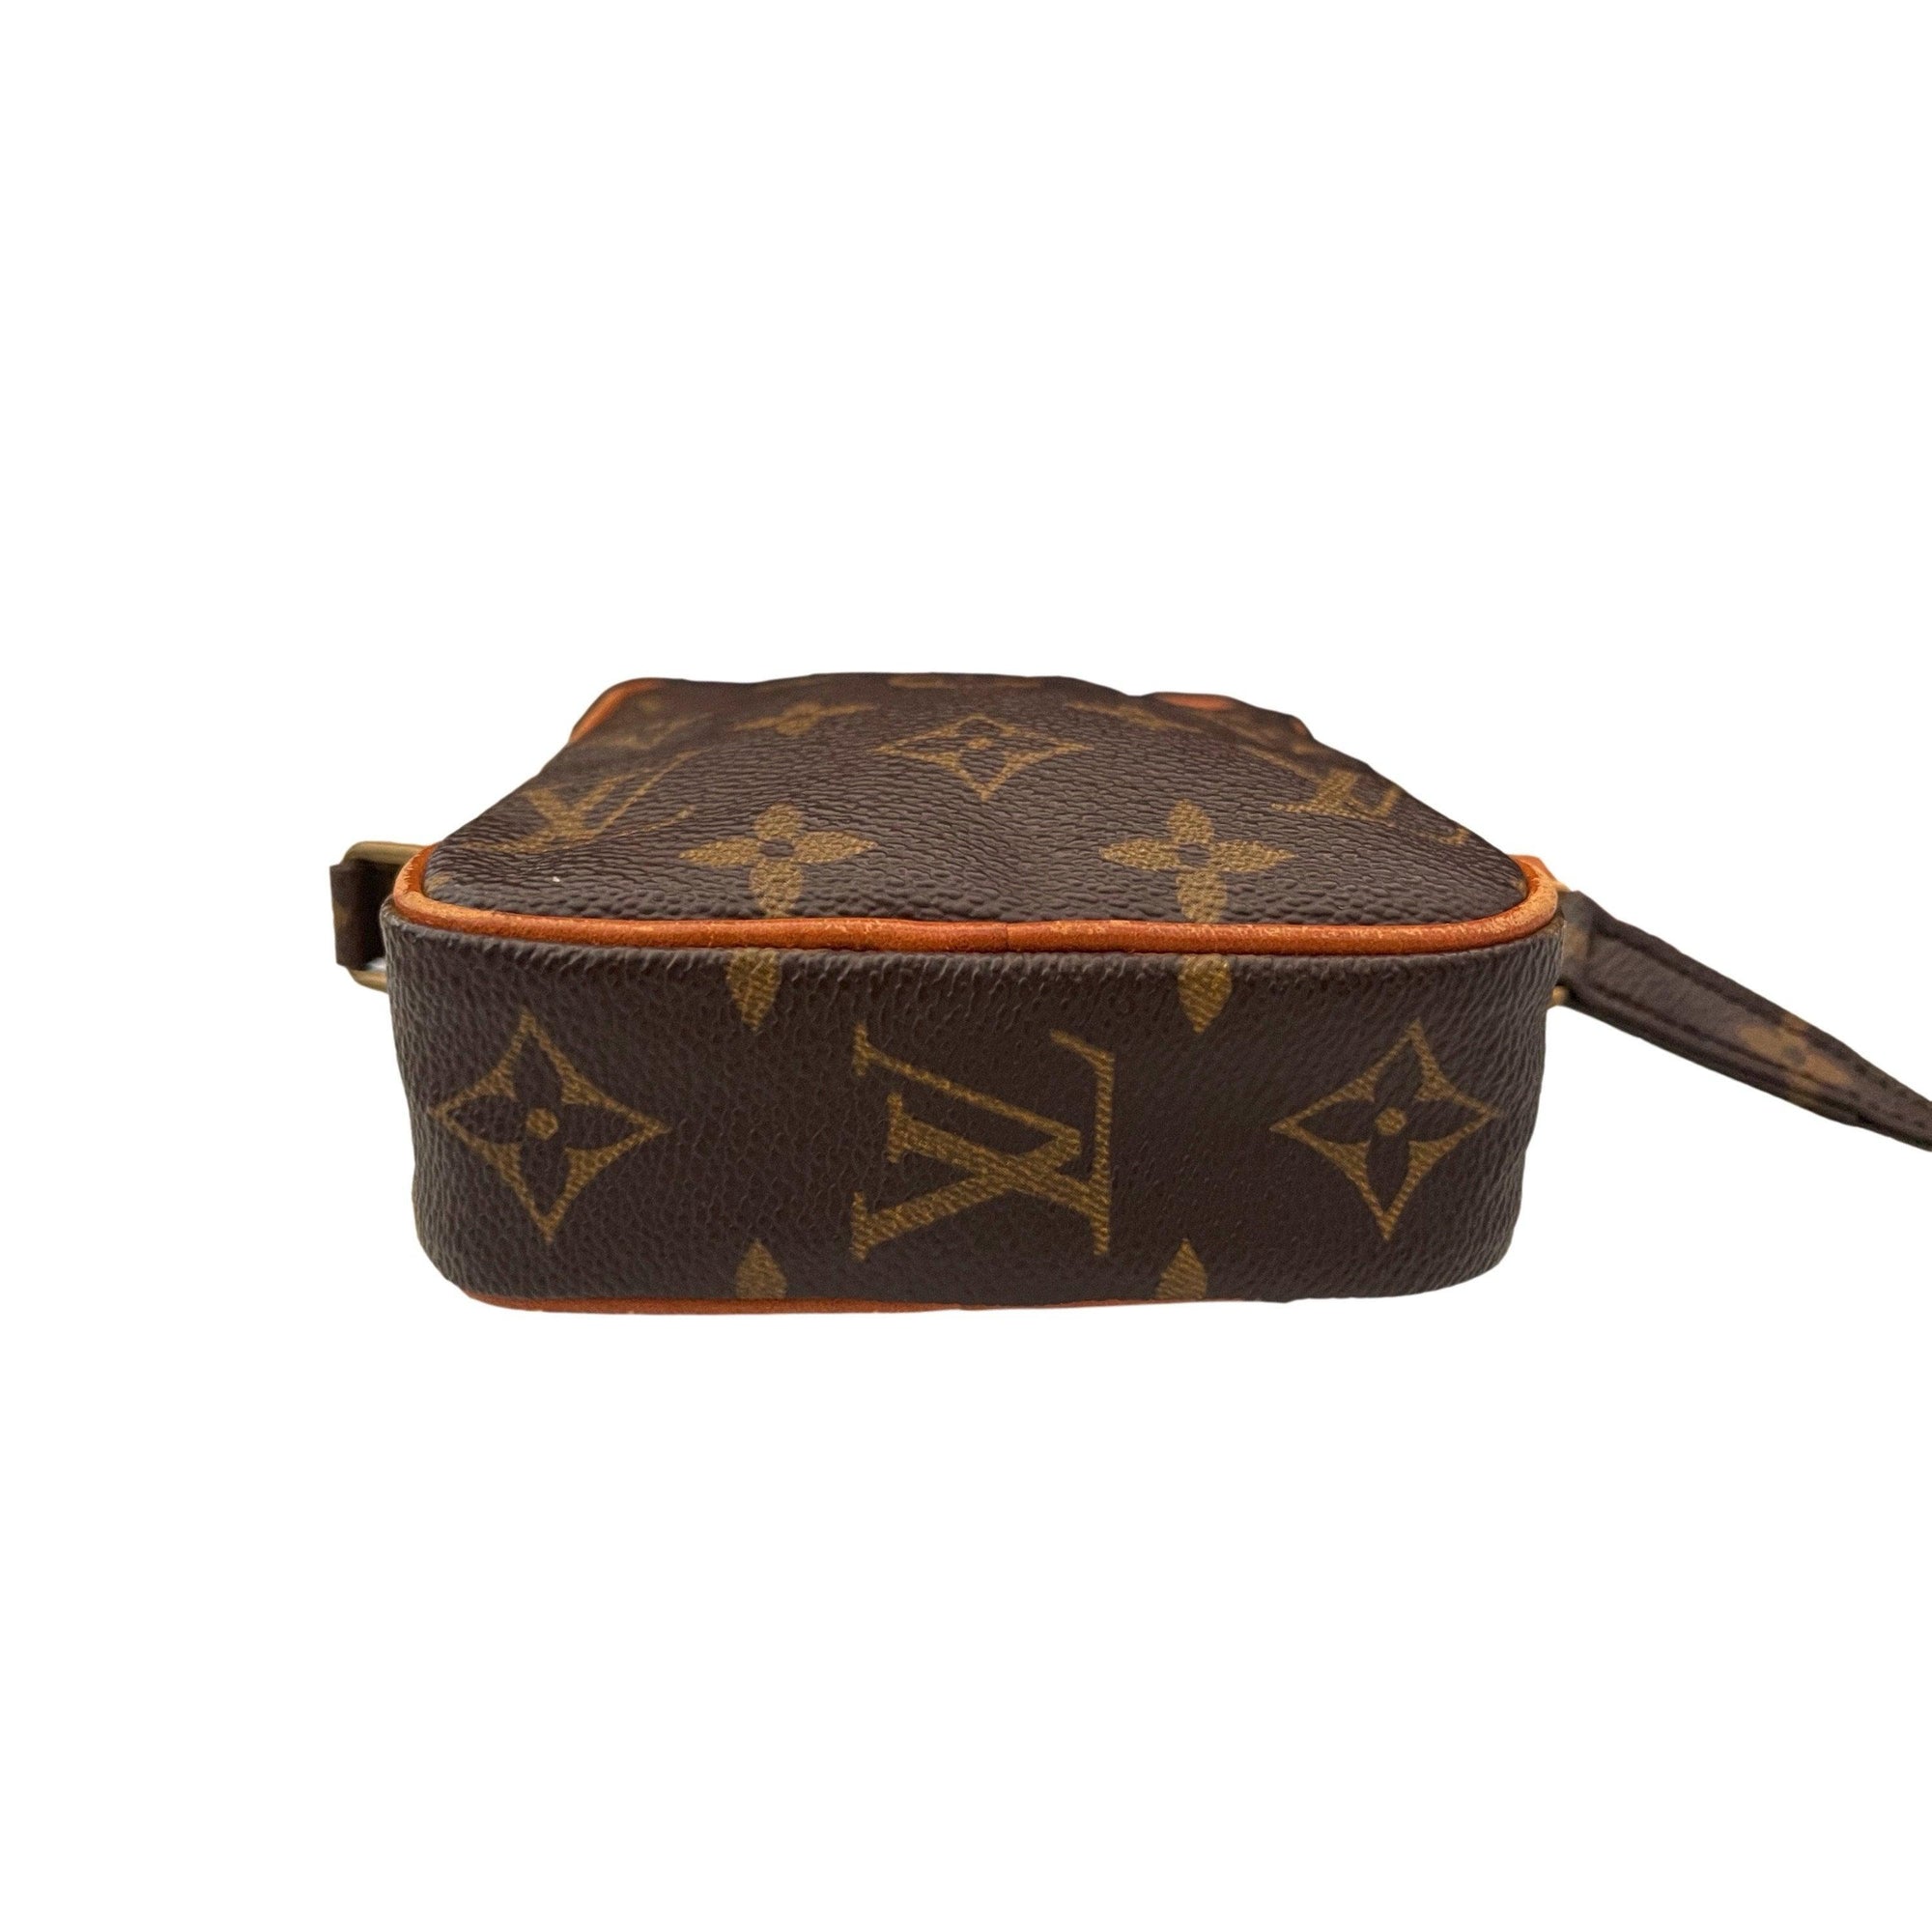 Treasures of NYC - Louis Vuitton Monogram Mini Bag